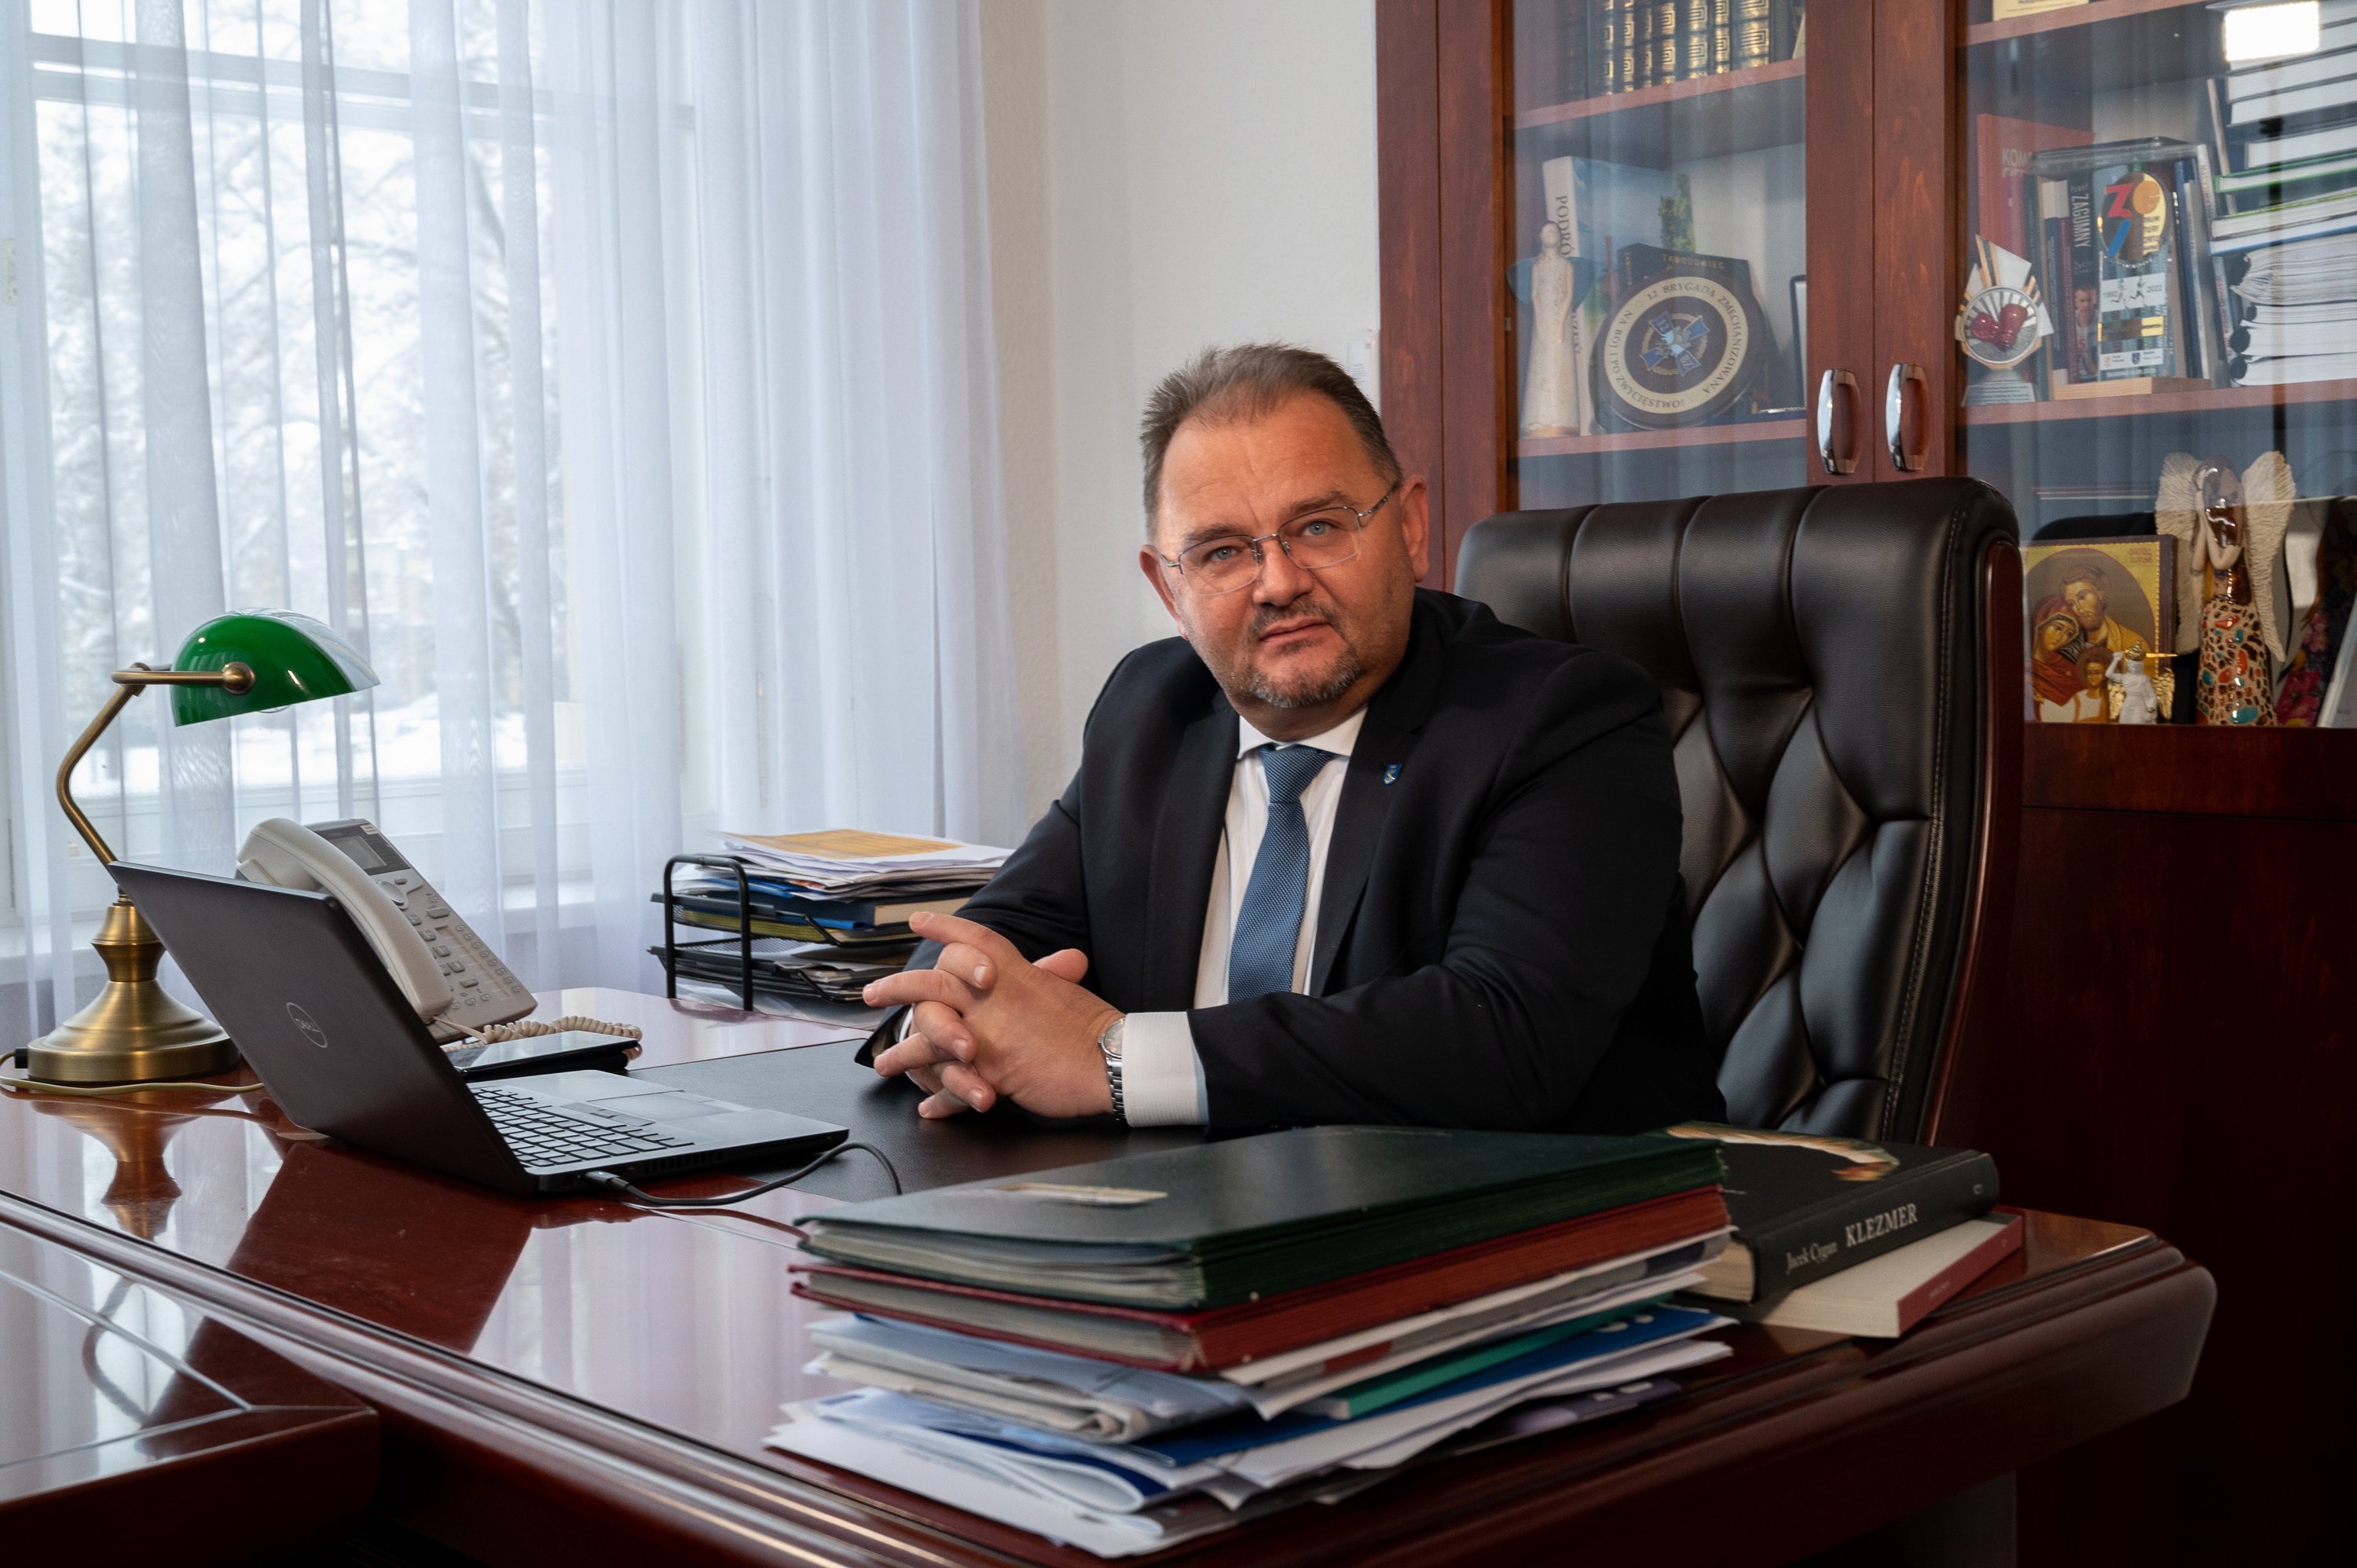 Burmistrz Norbert Rzepisko